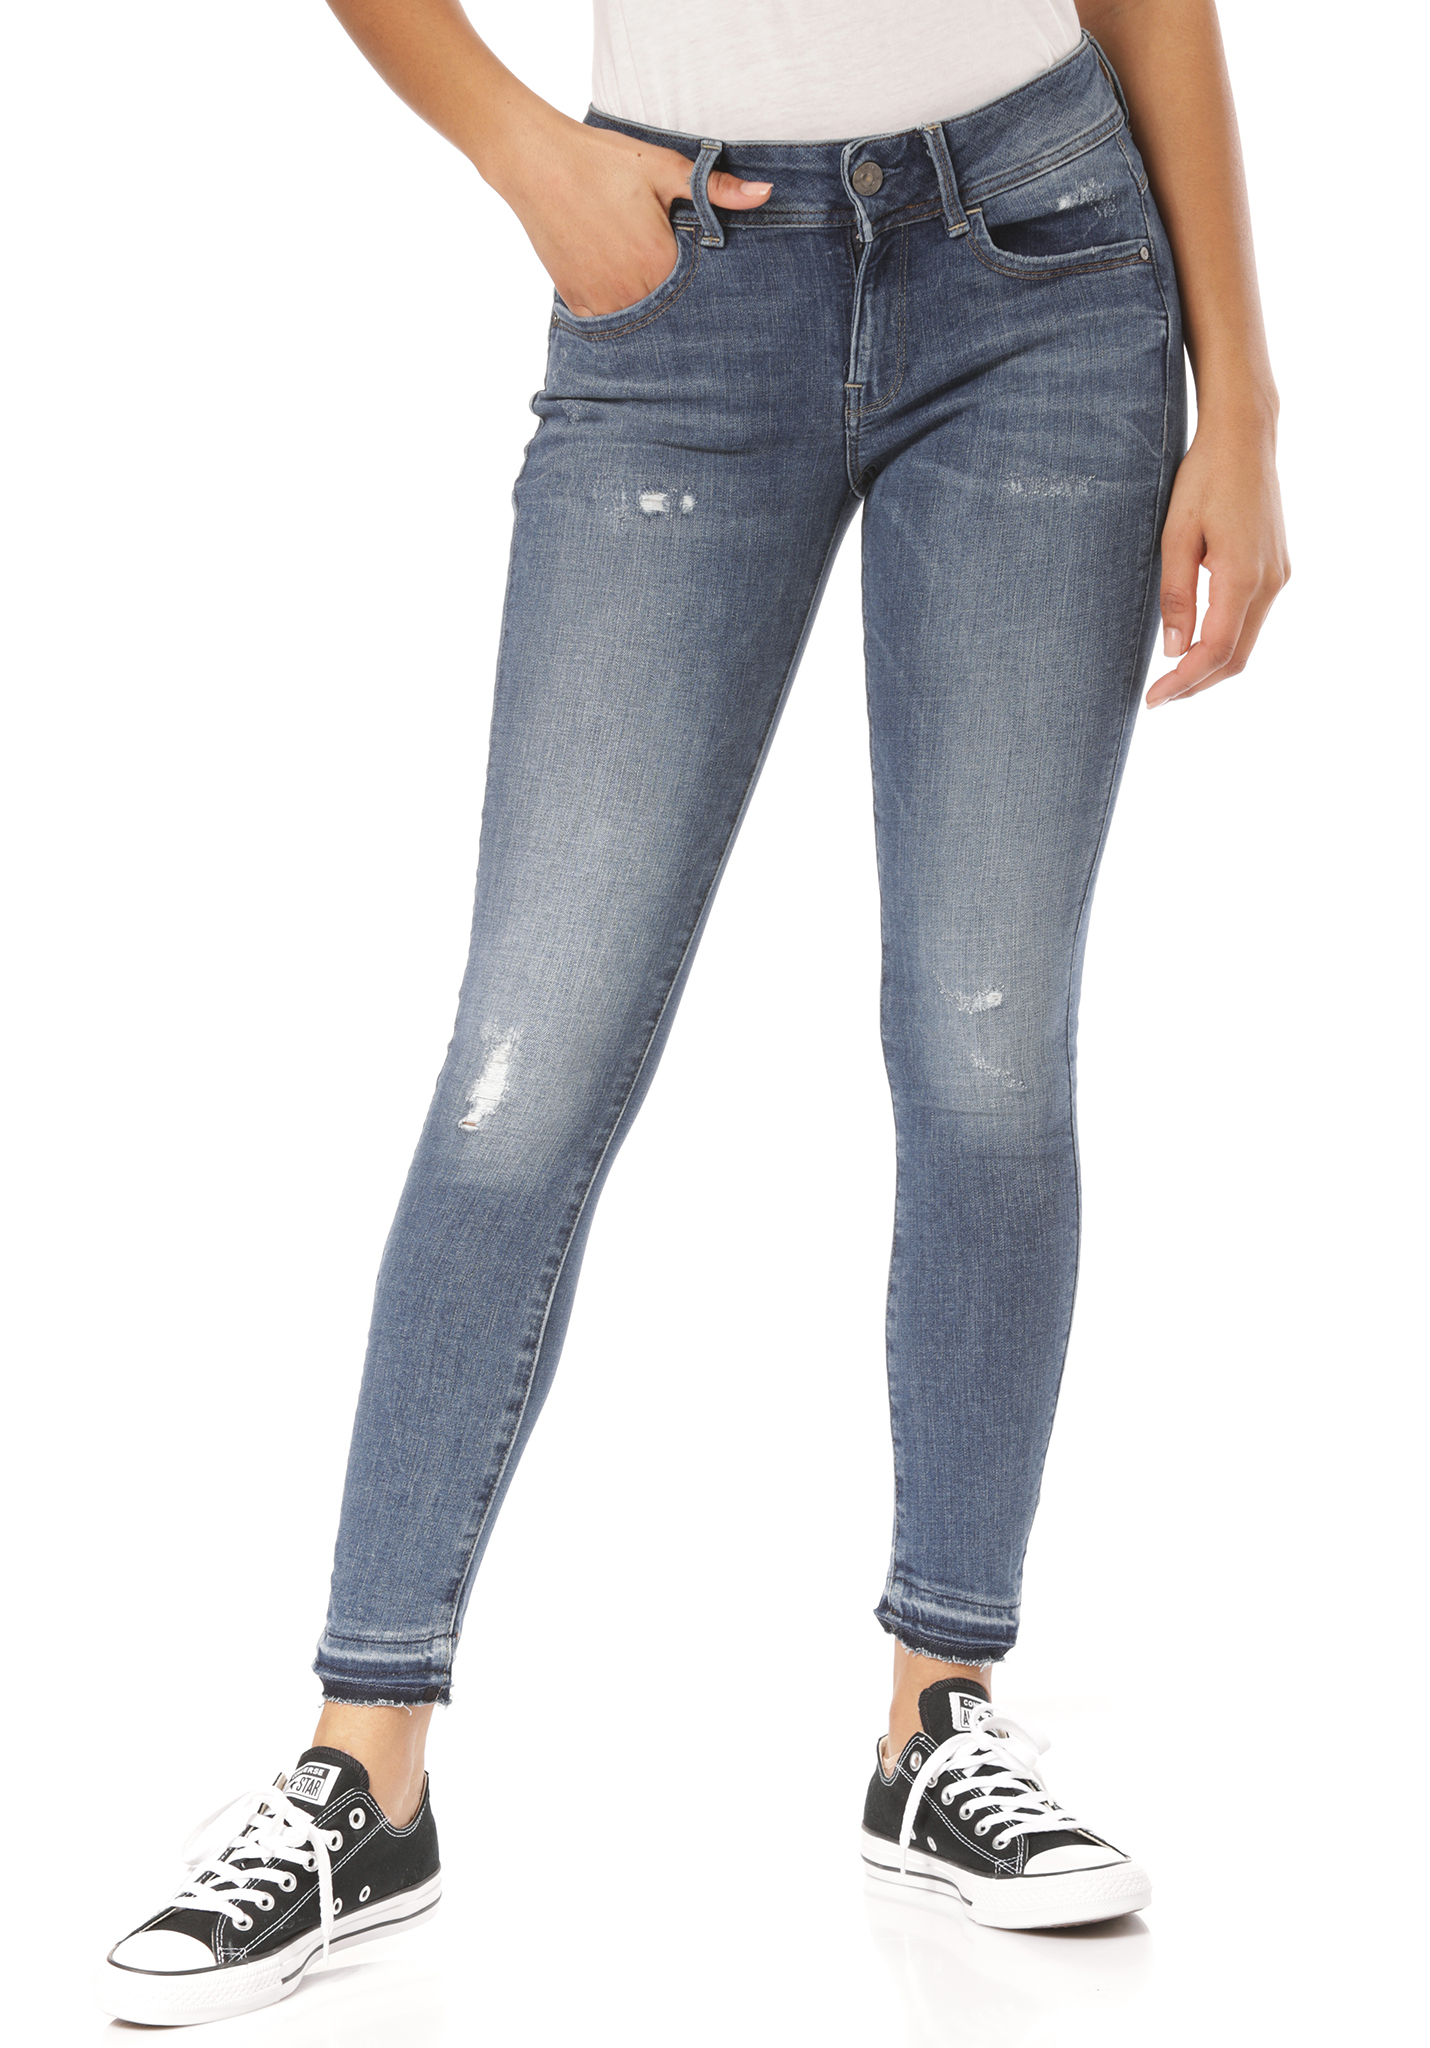 G-Star Lynn Mid Skinny Rp Ankle Trender Ultimate Stretch Skinny Jeans weiß 27/32